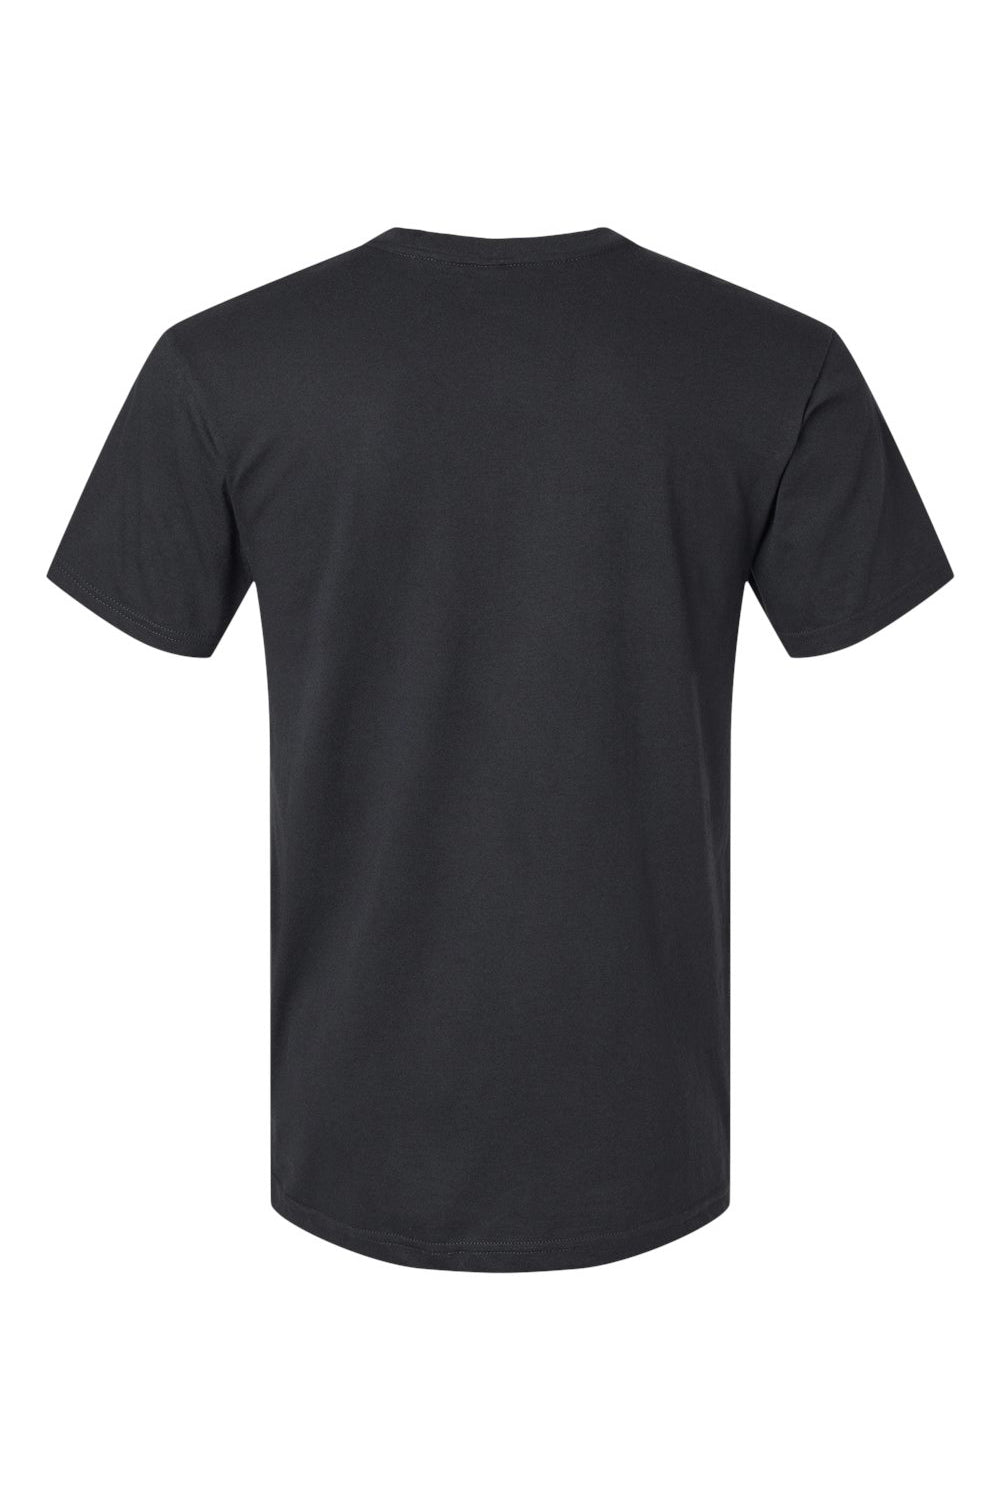 American Apparel 2004CVC Mens CVC Short Sleeve Henley T-Shirt Black Flat Back